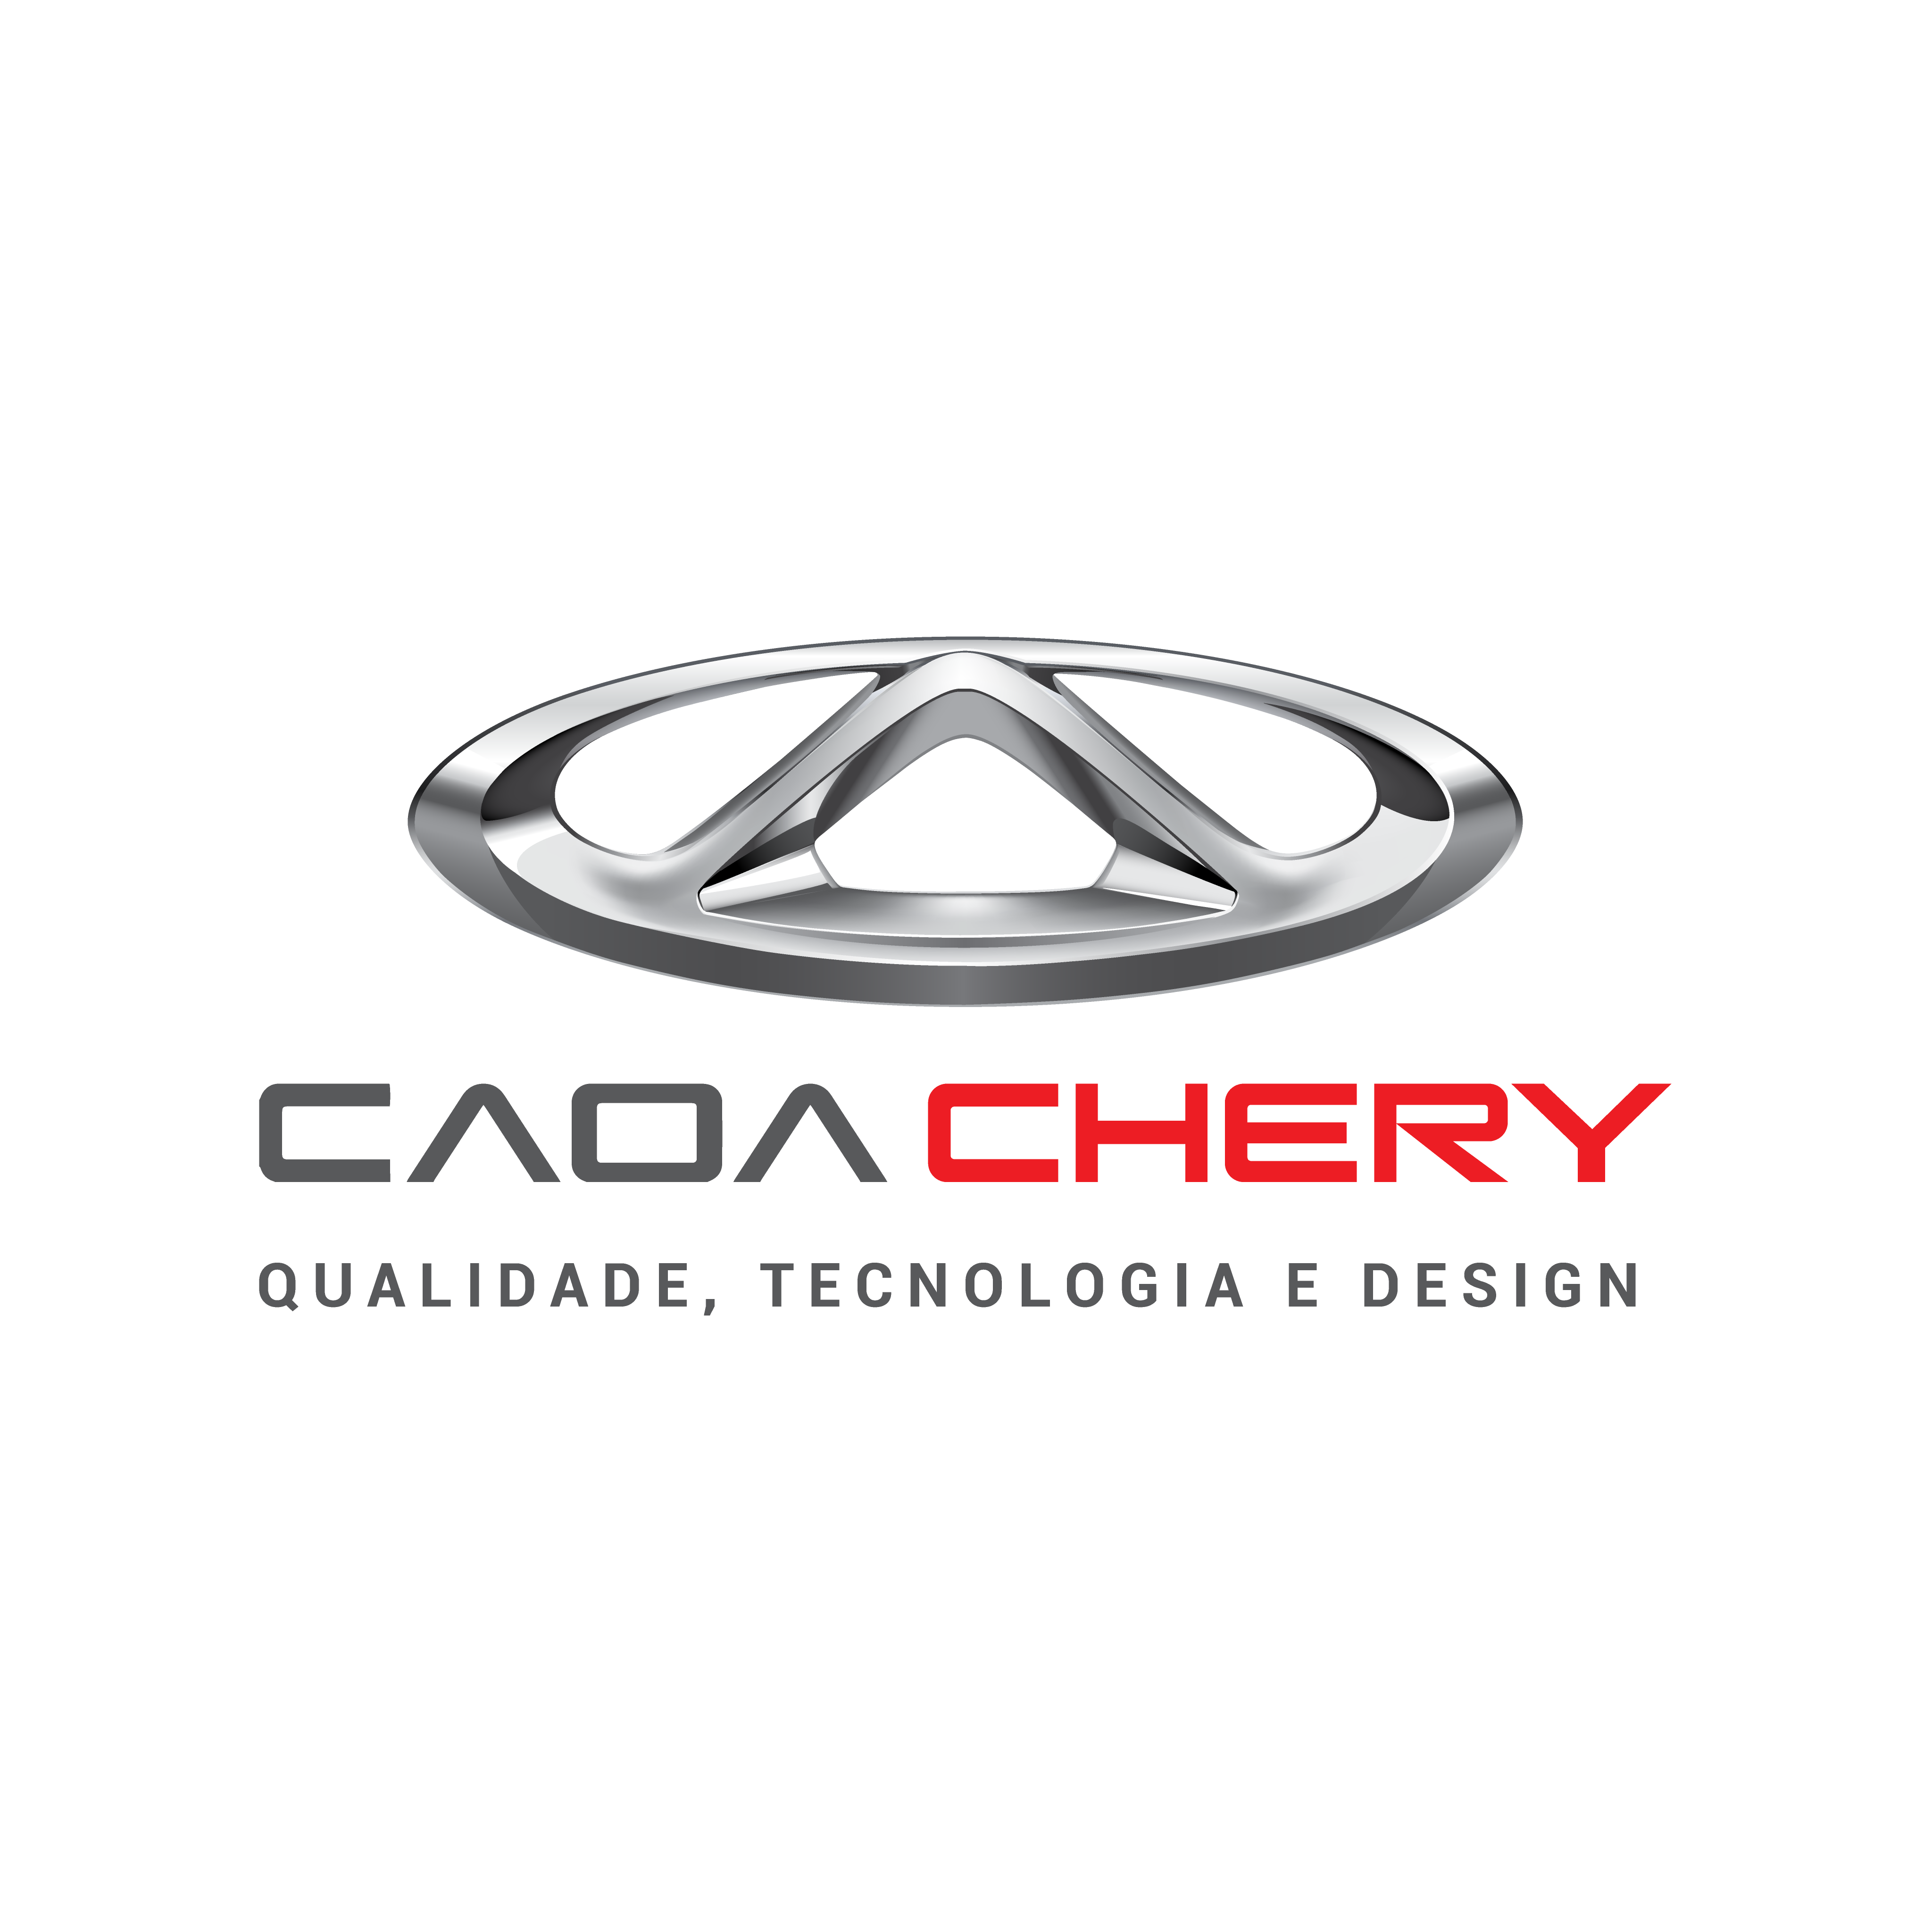 CAOA Chery Logo PNG.